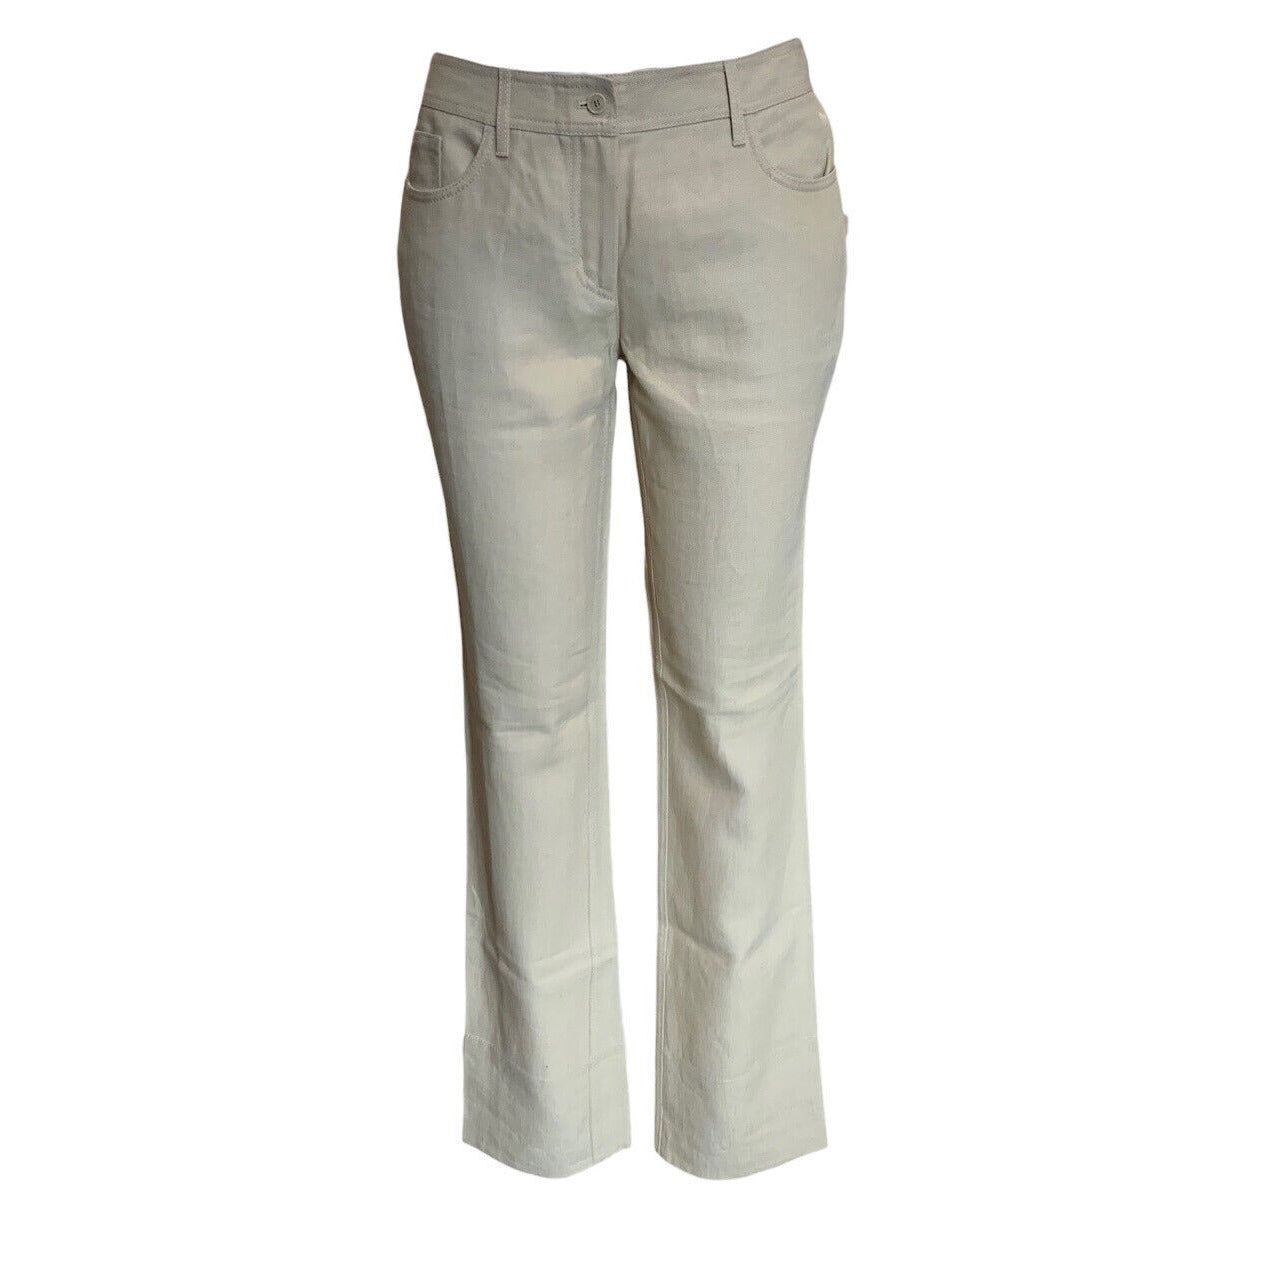 Hermes 5 Pocket Linen Crepe Jean Style Pant